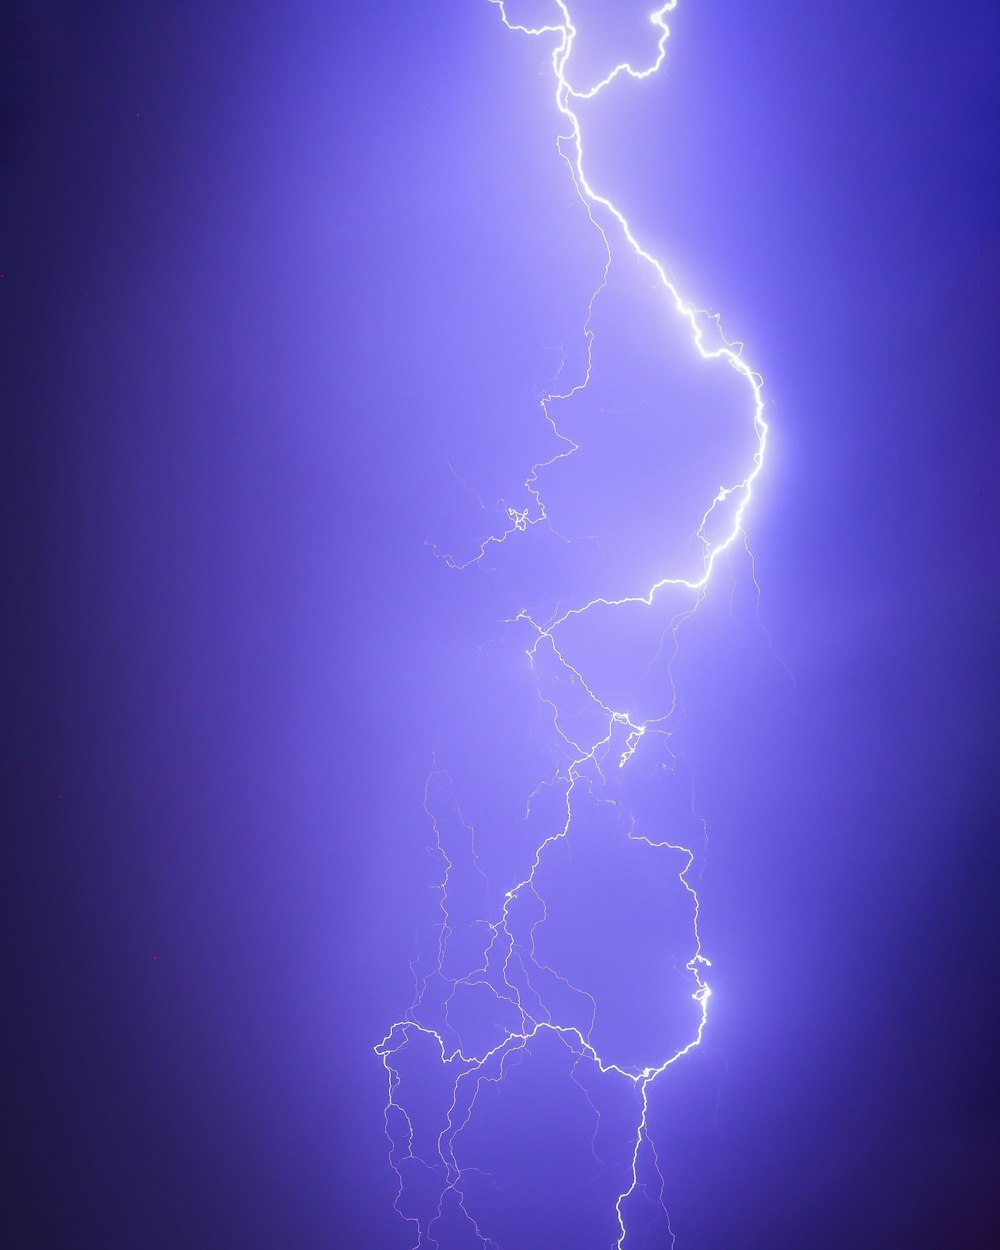 30,000+ Purple Lightning Pictures | Download Free Images on Unsplash